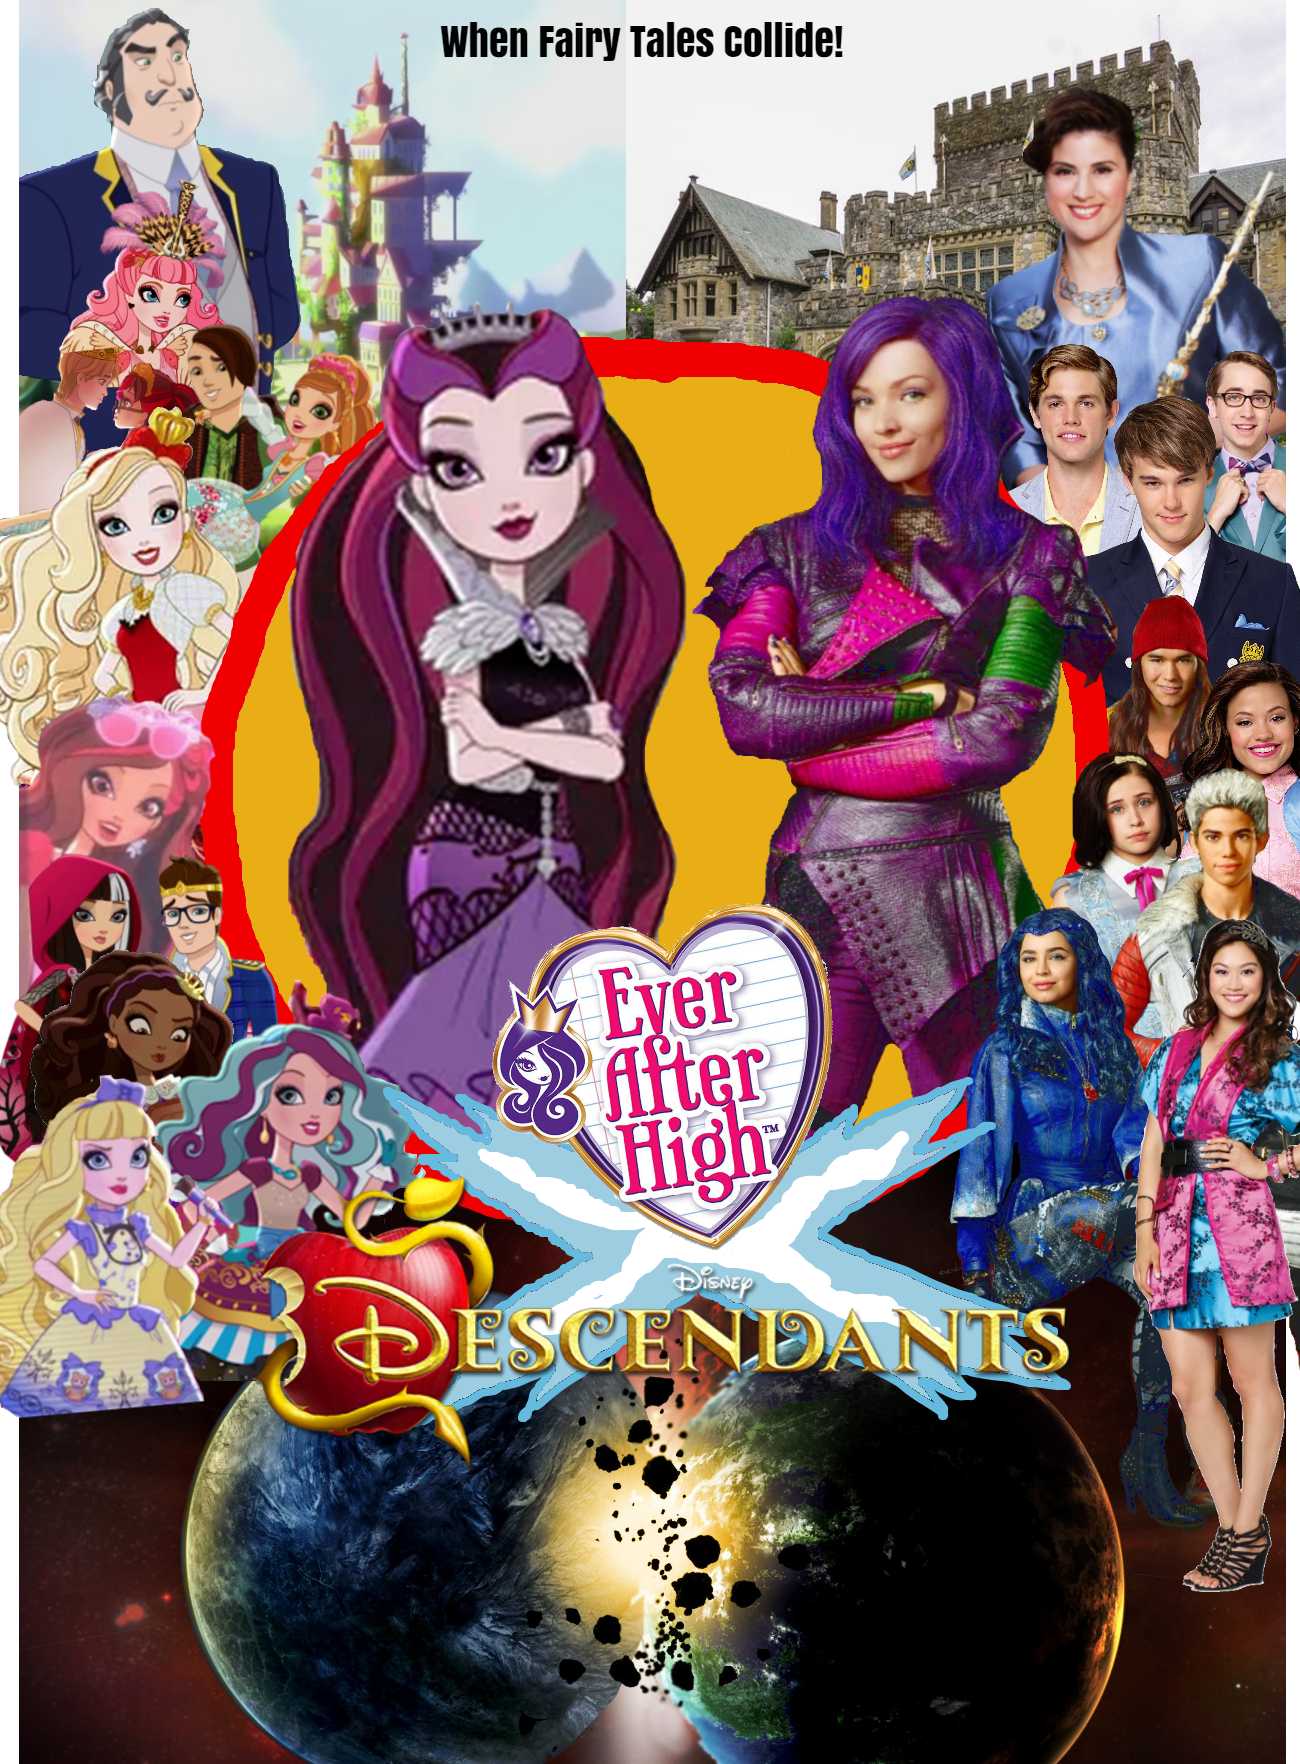 Disney's 'Descendants' Sends Up Fairy-Tale Villains With Teen Twist